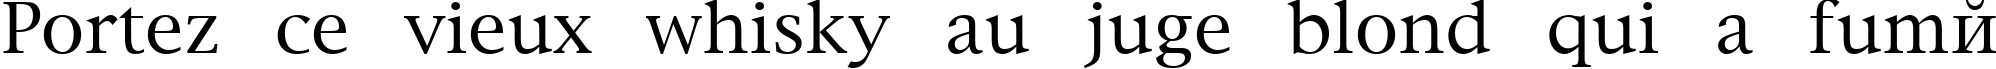 Пример написания шрифтом New York Plain:001.003 текста на французском